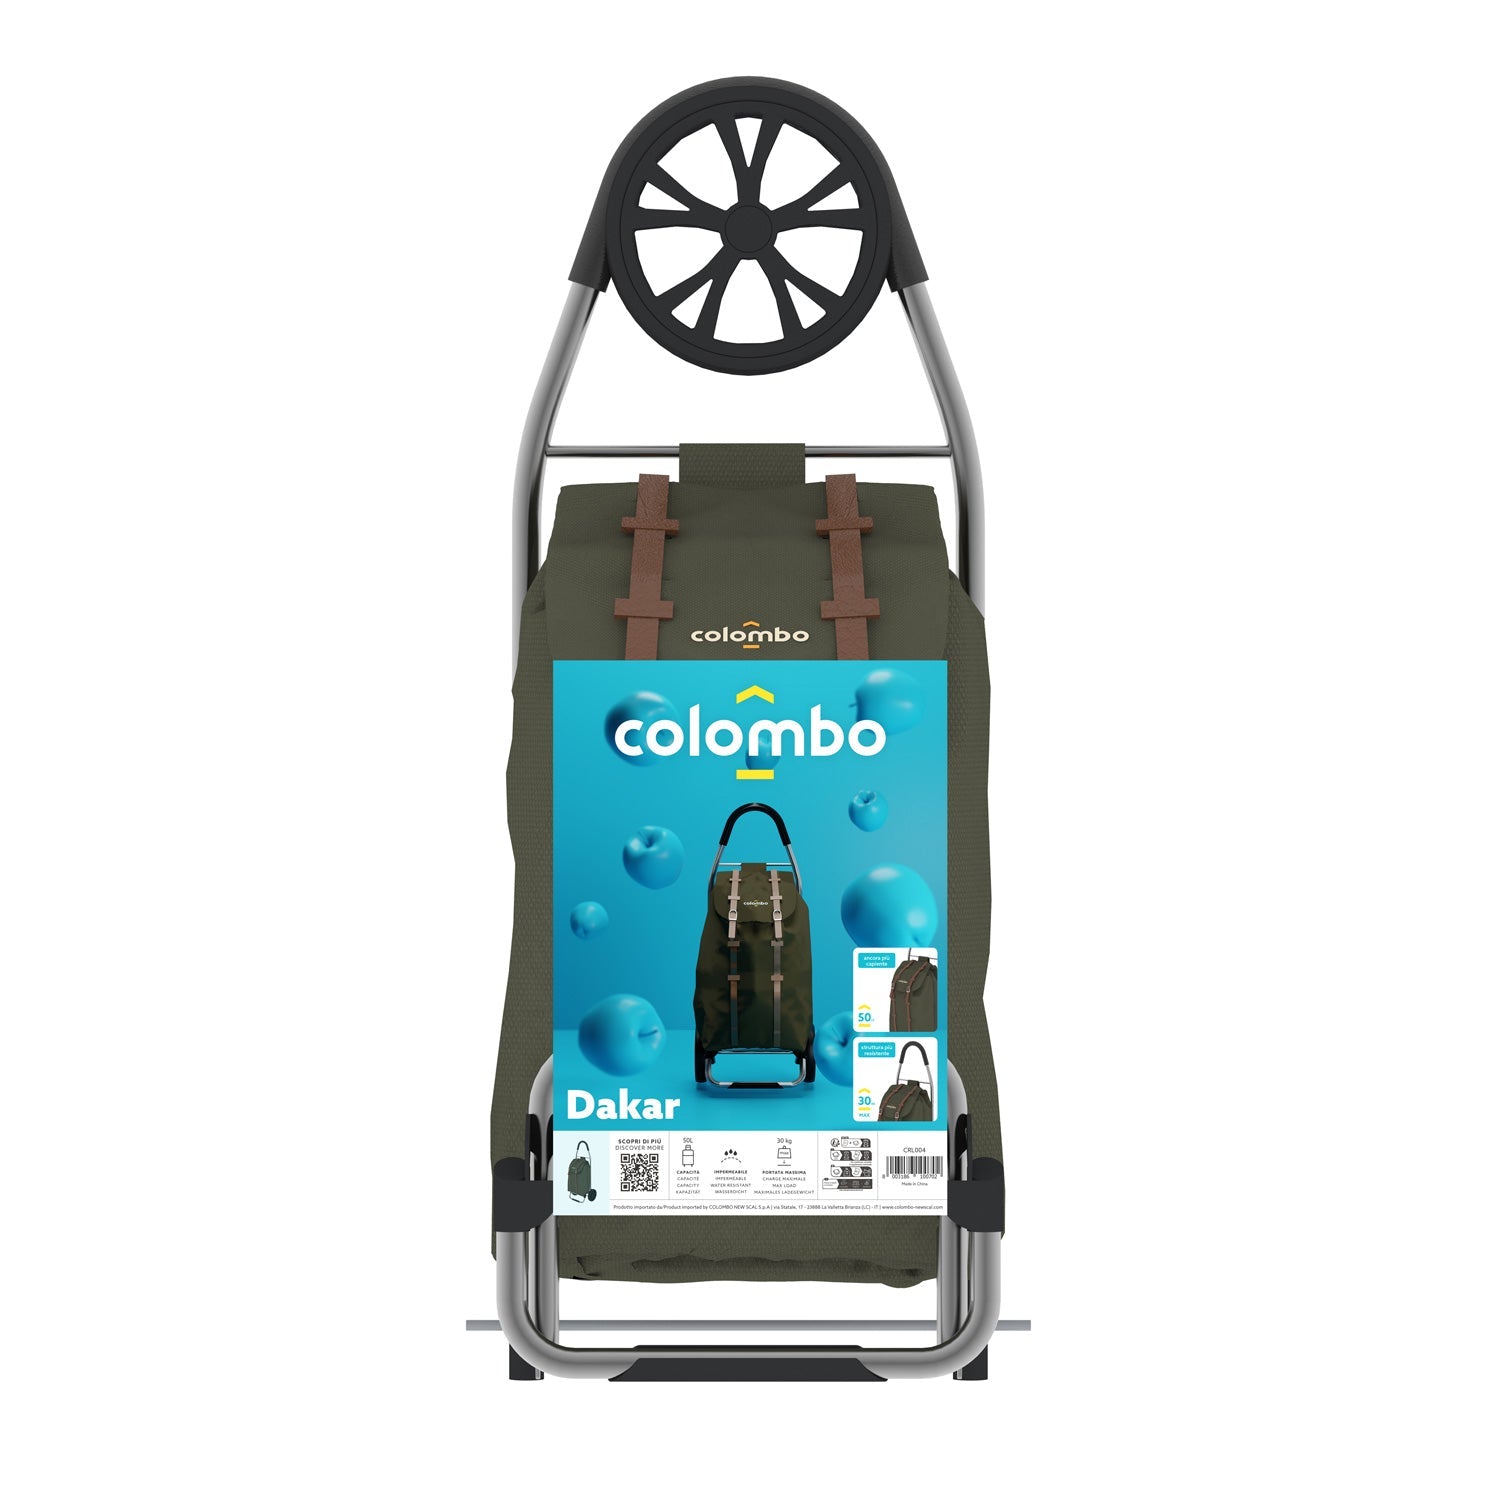 Carrito de compras, carrito de la compra, con ruedas XL, bolsa de poliéster impermeable, 50 litros, verde, Colombo